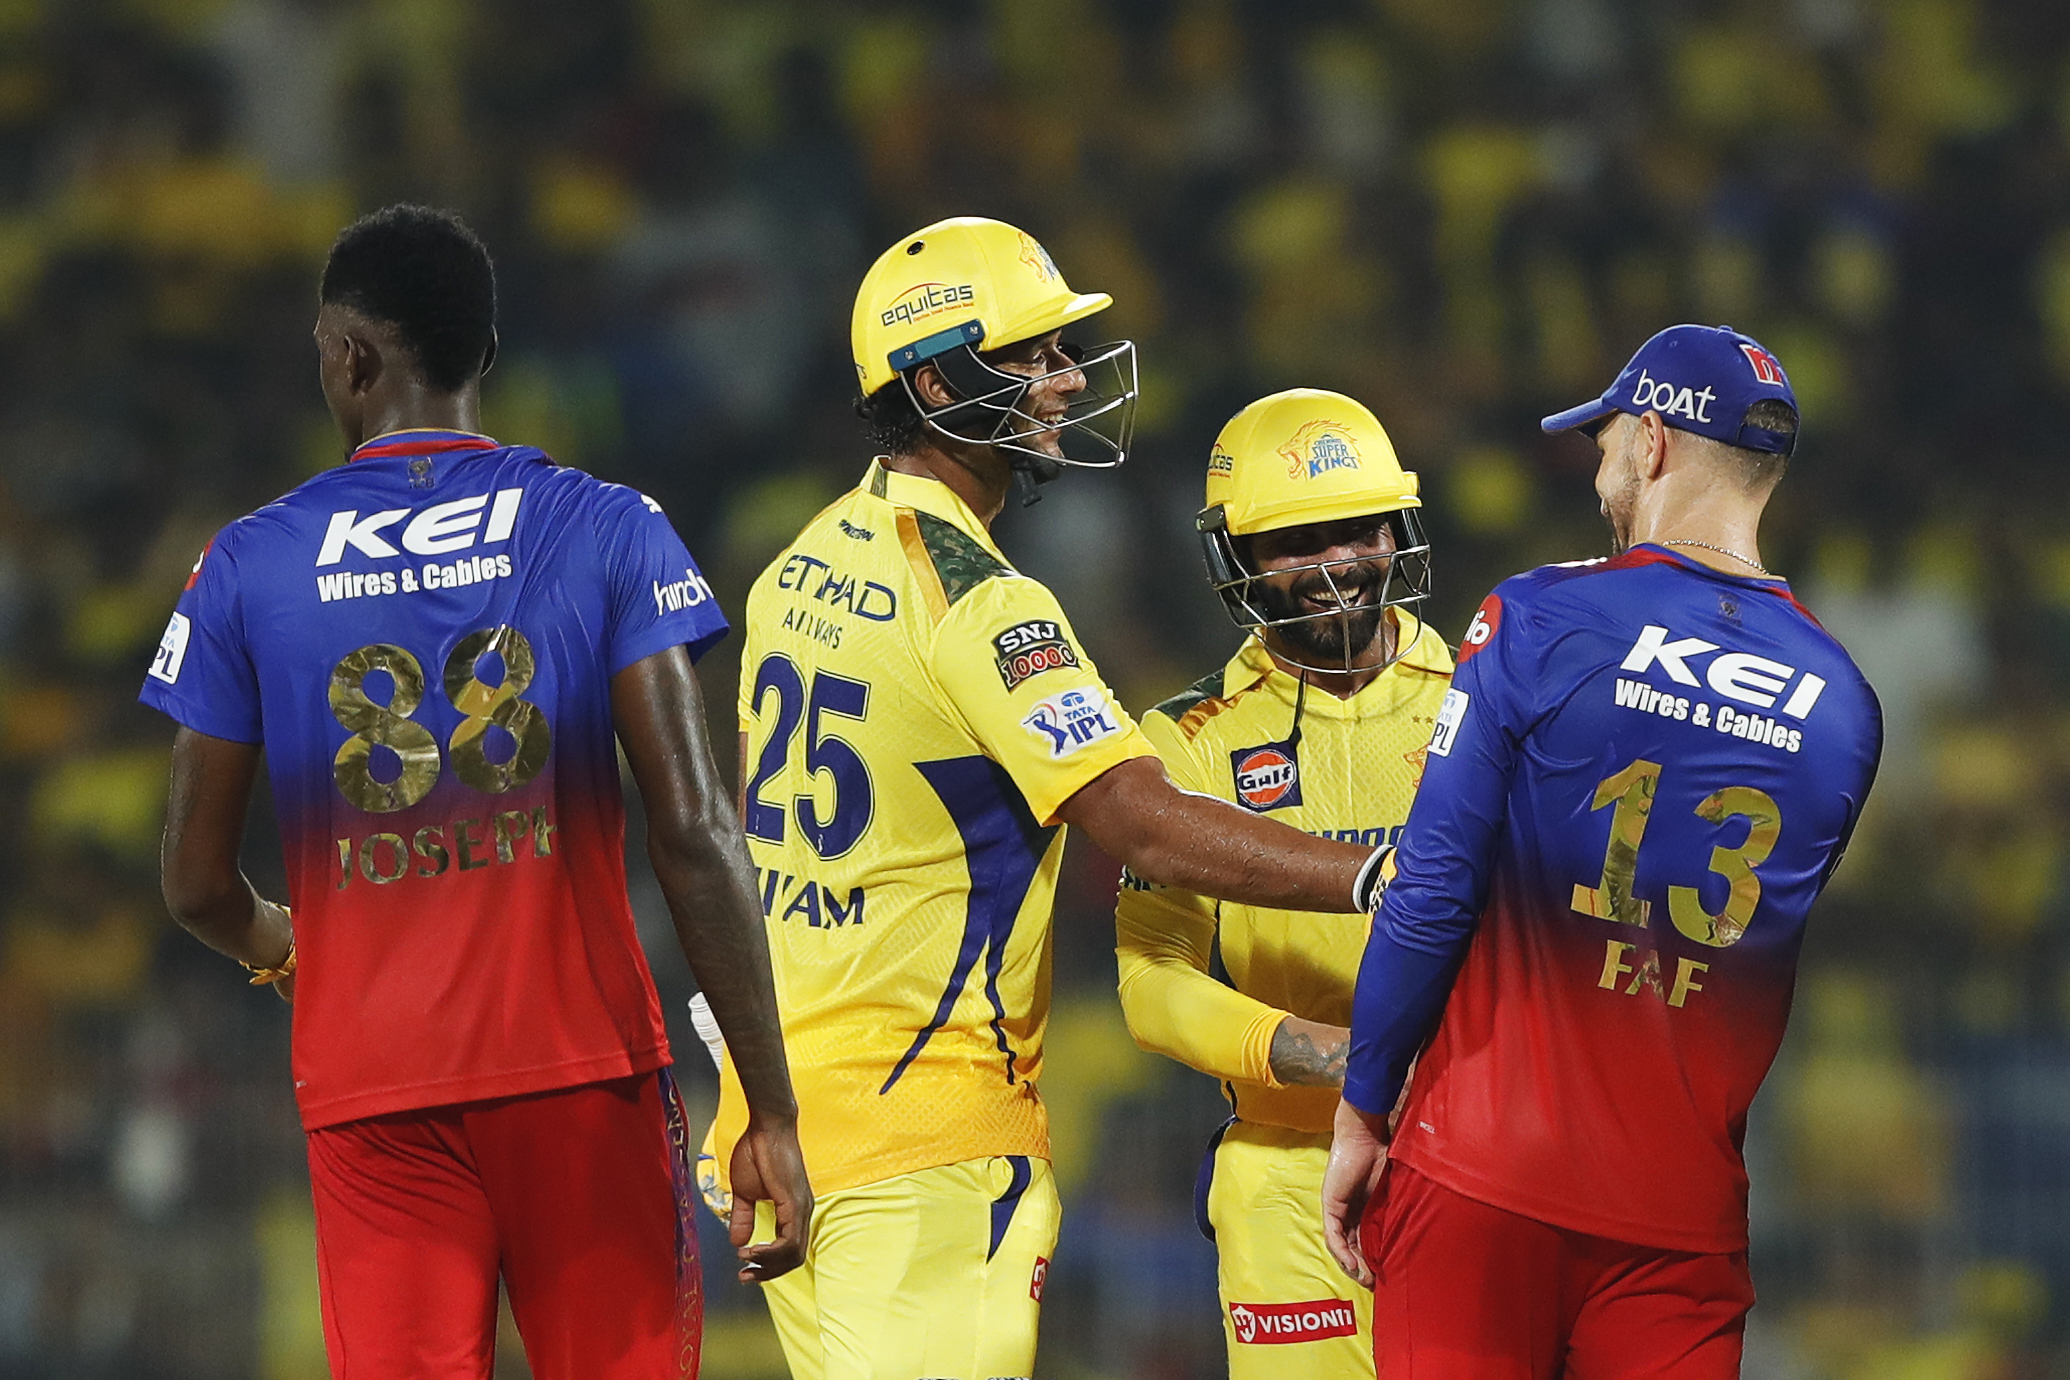 Cricket-Bengaluru's Karthik shrugs off Chennai defeat, backs batsmen to fire